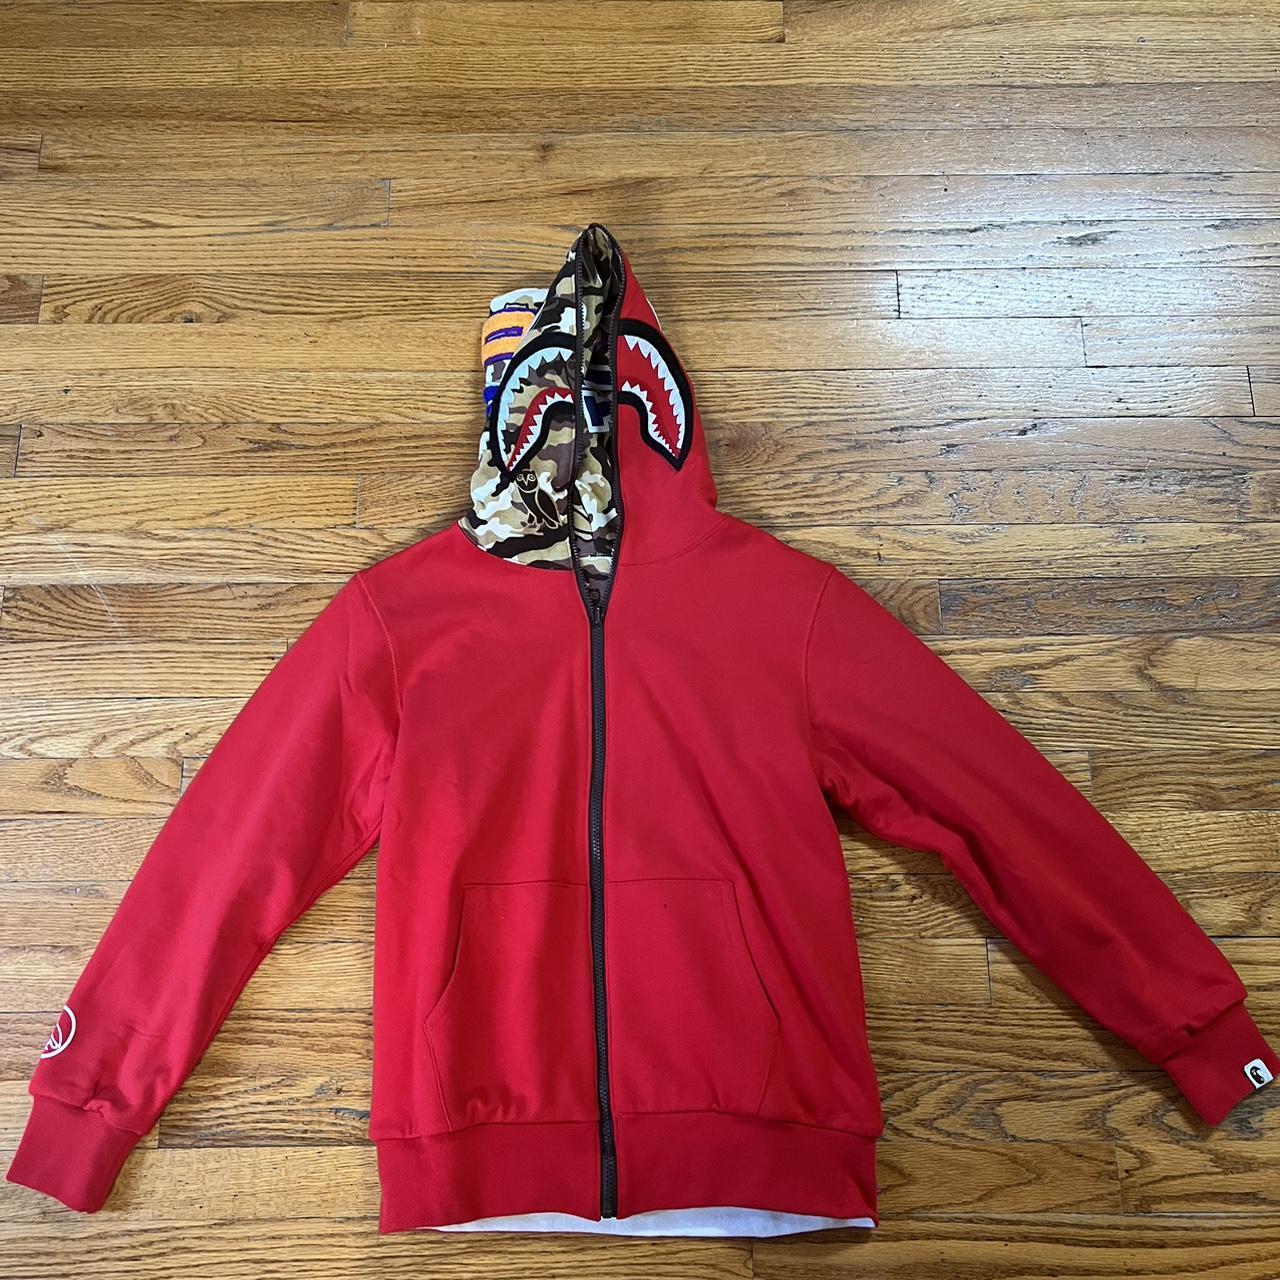 Bape Red Camo In Men's Sweats & Hoodies for Sale, Shop Men's Athletic  Clothes